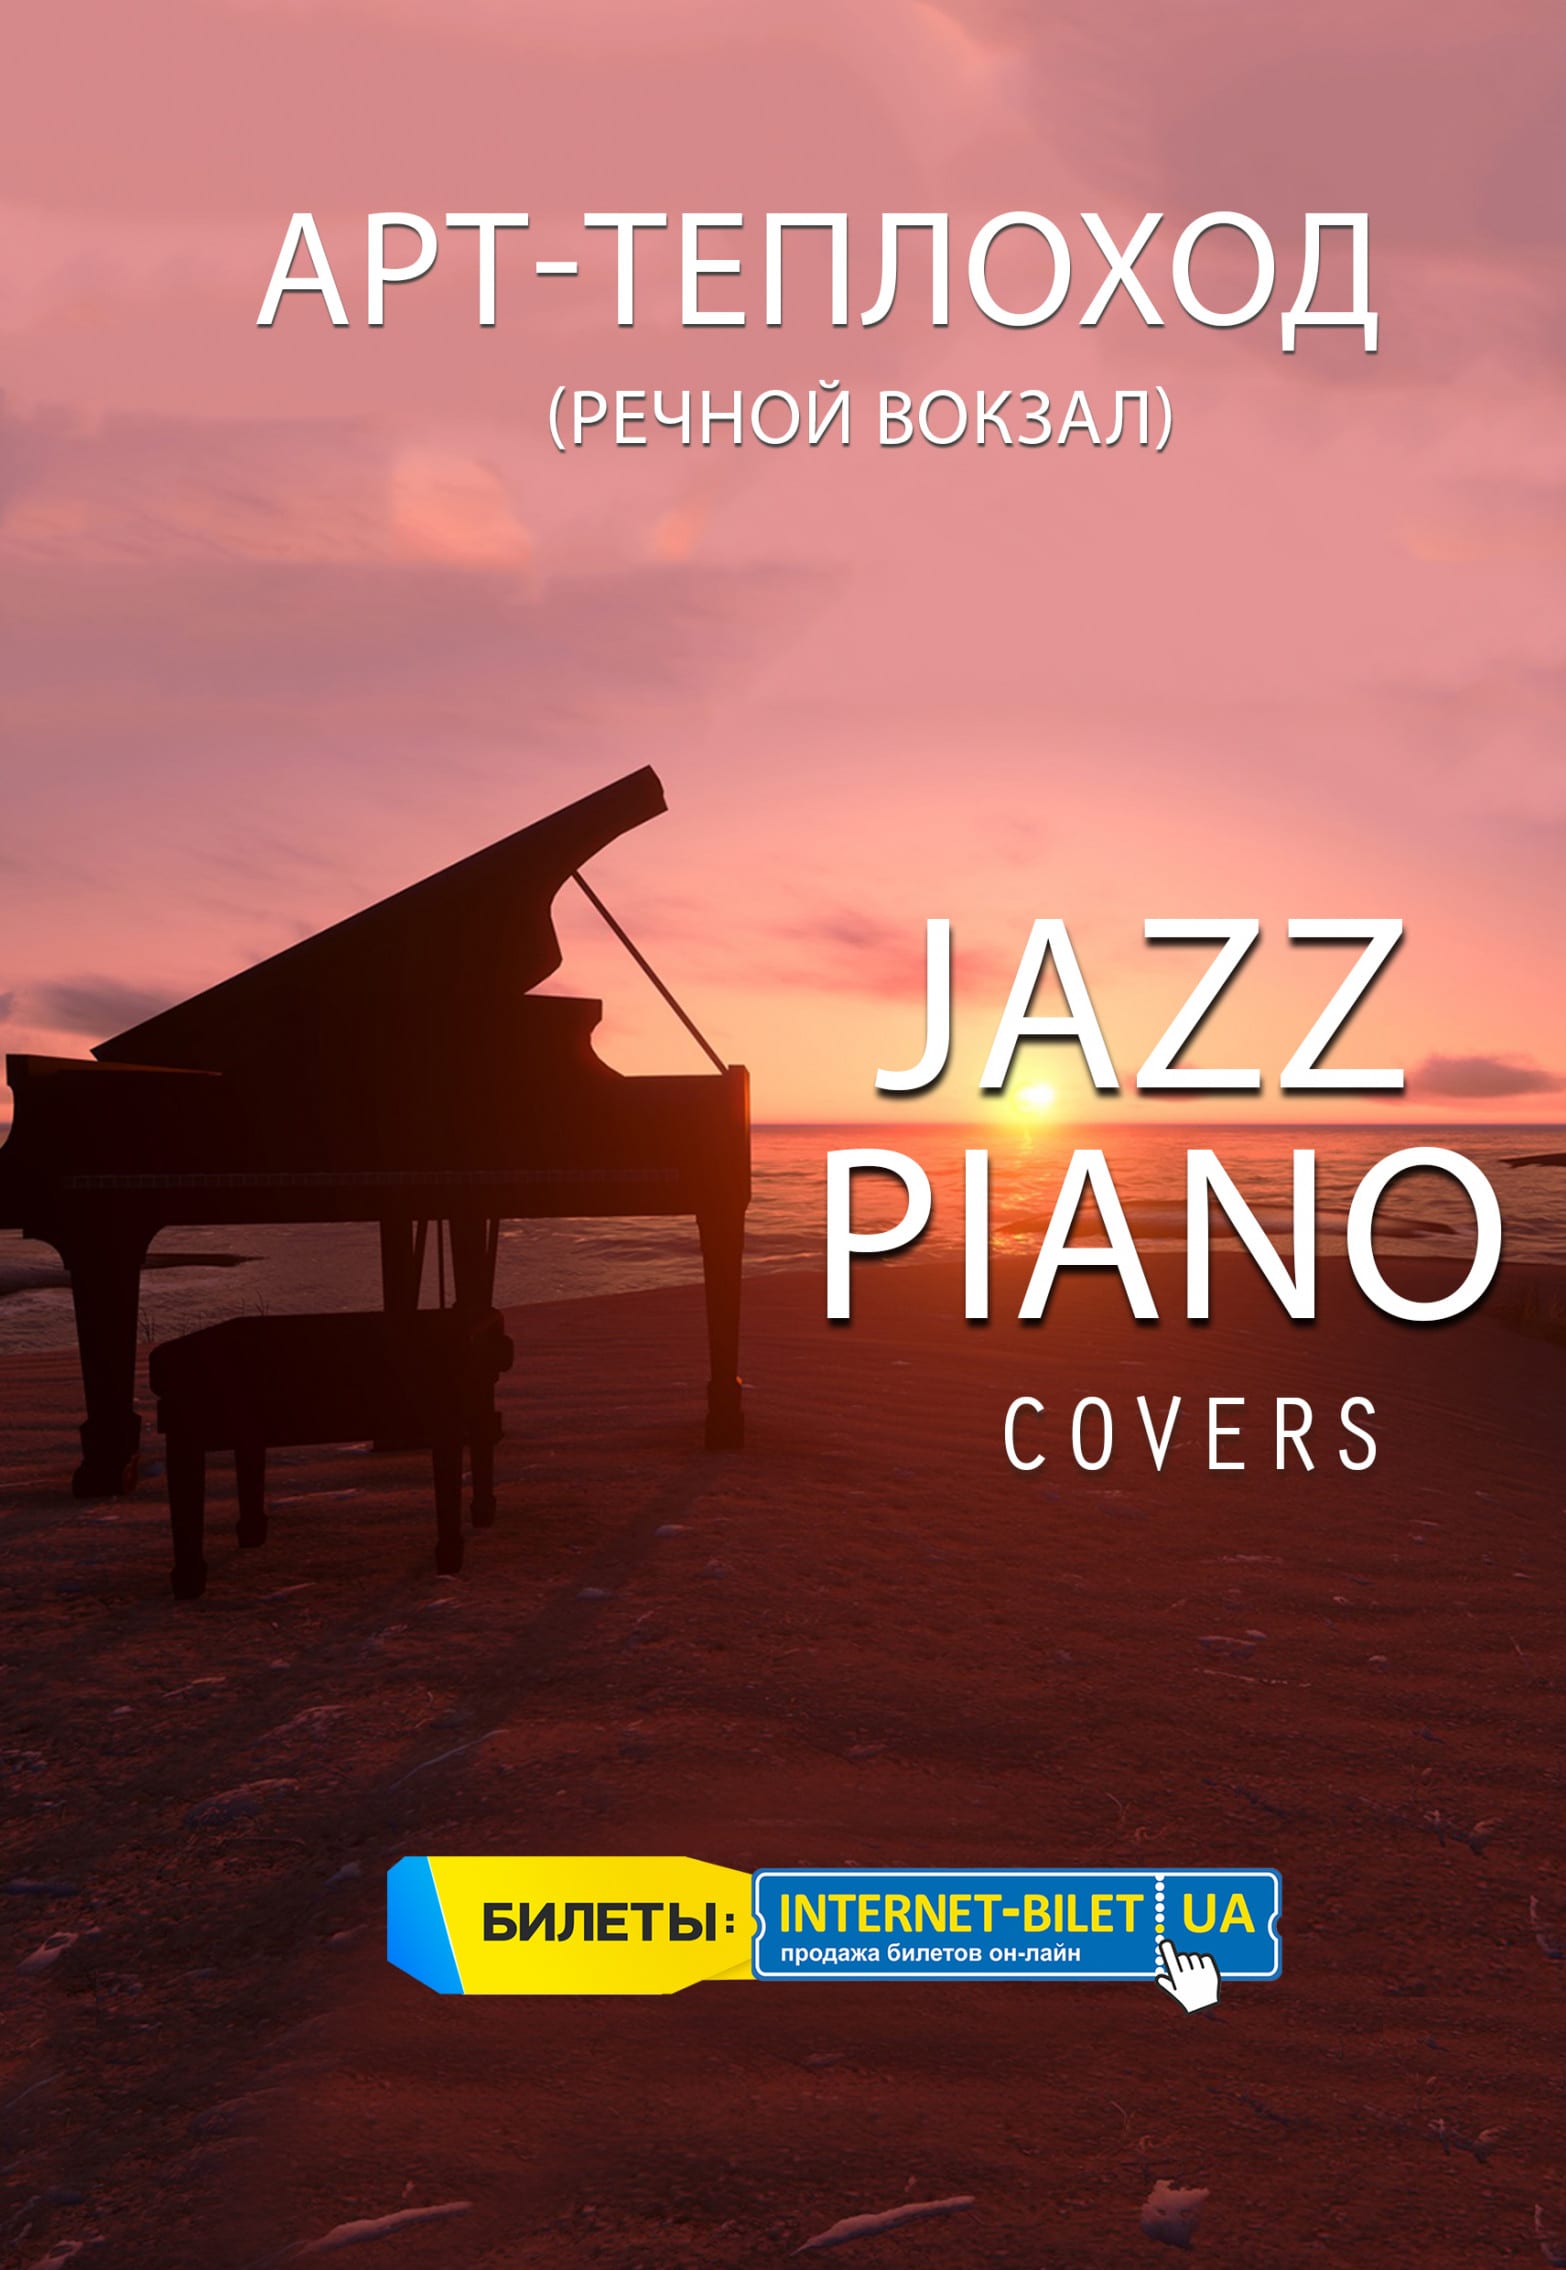 Jazz Piano на Арт-Теплоходе Днепр, 22.07.2019, цена, купить билеты. Афиша Днепра